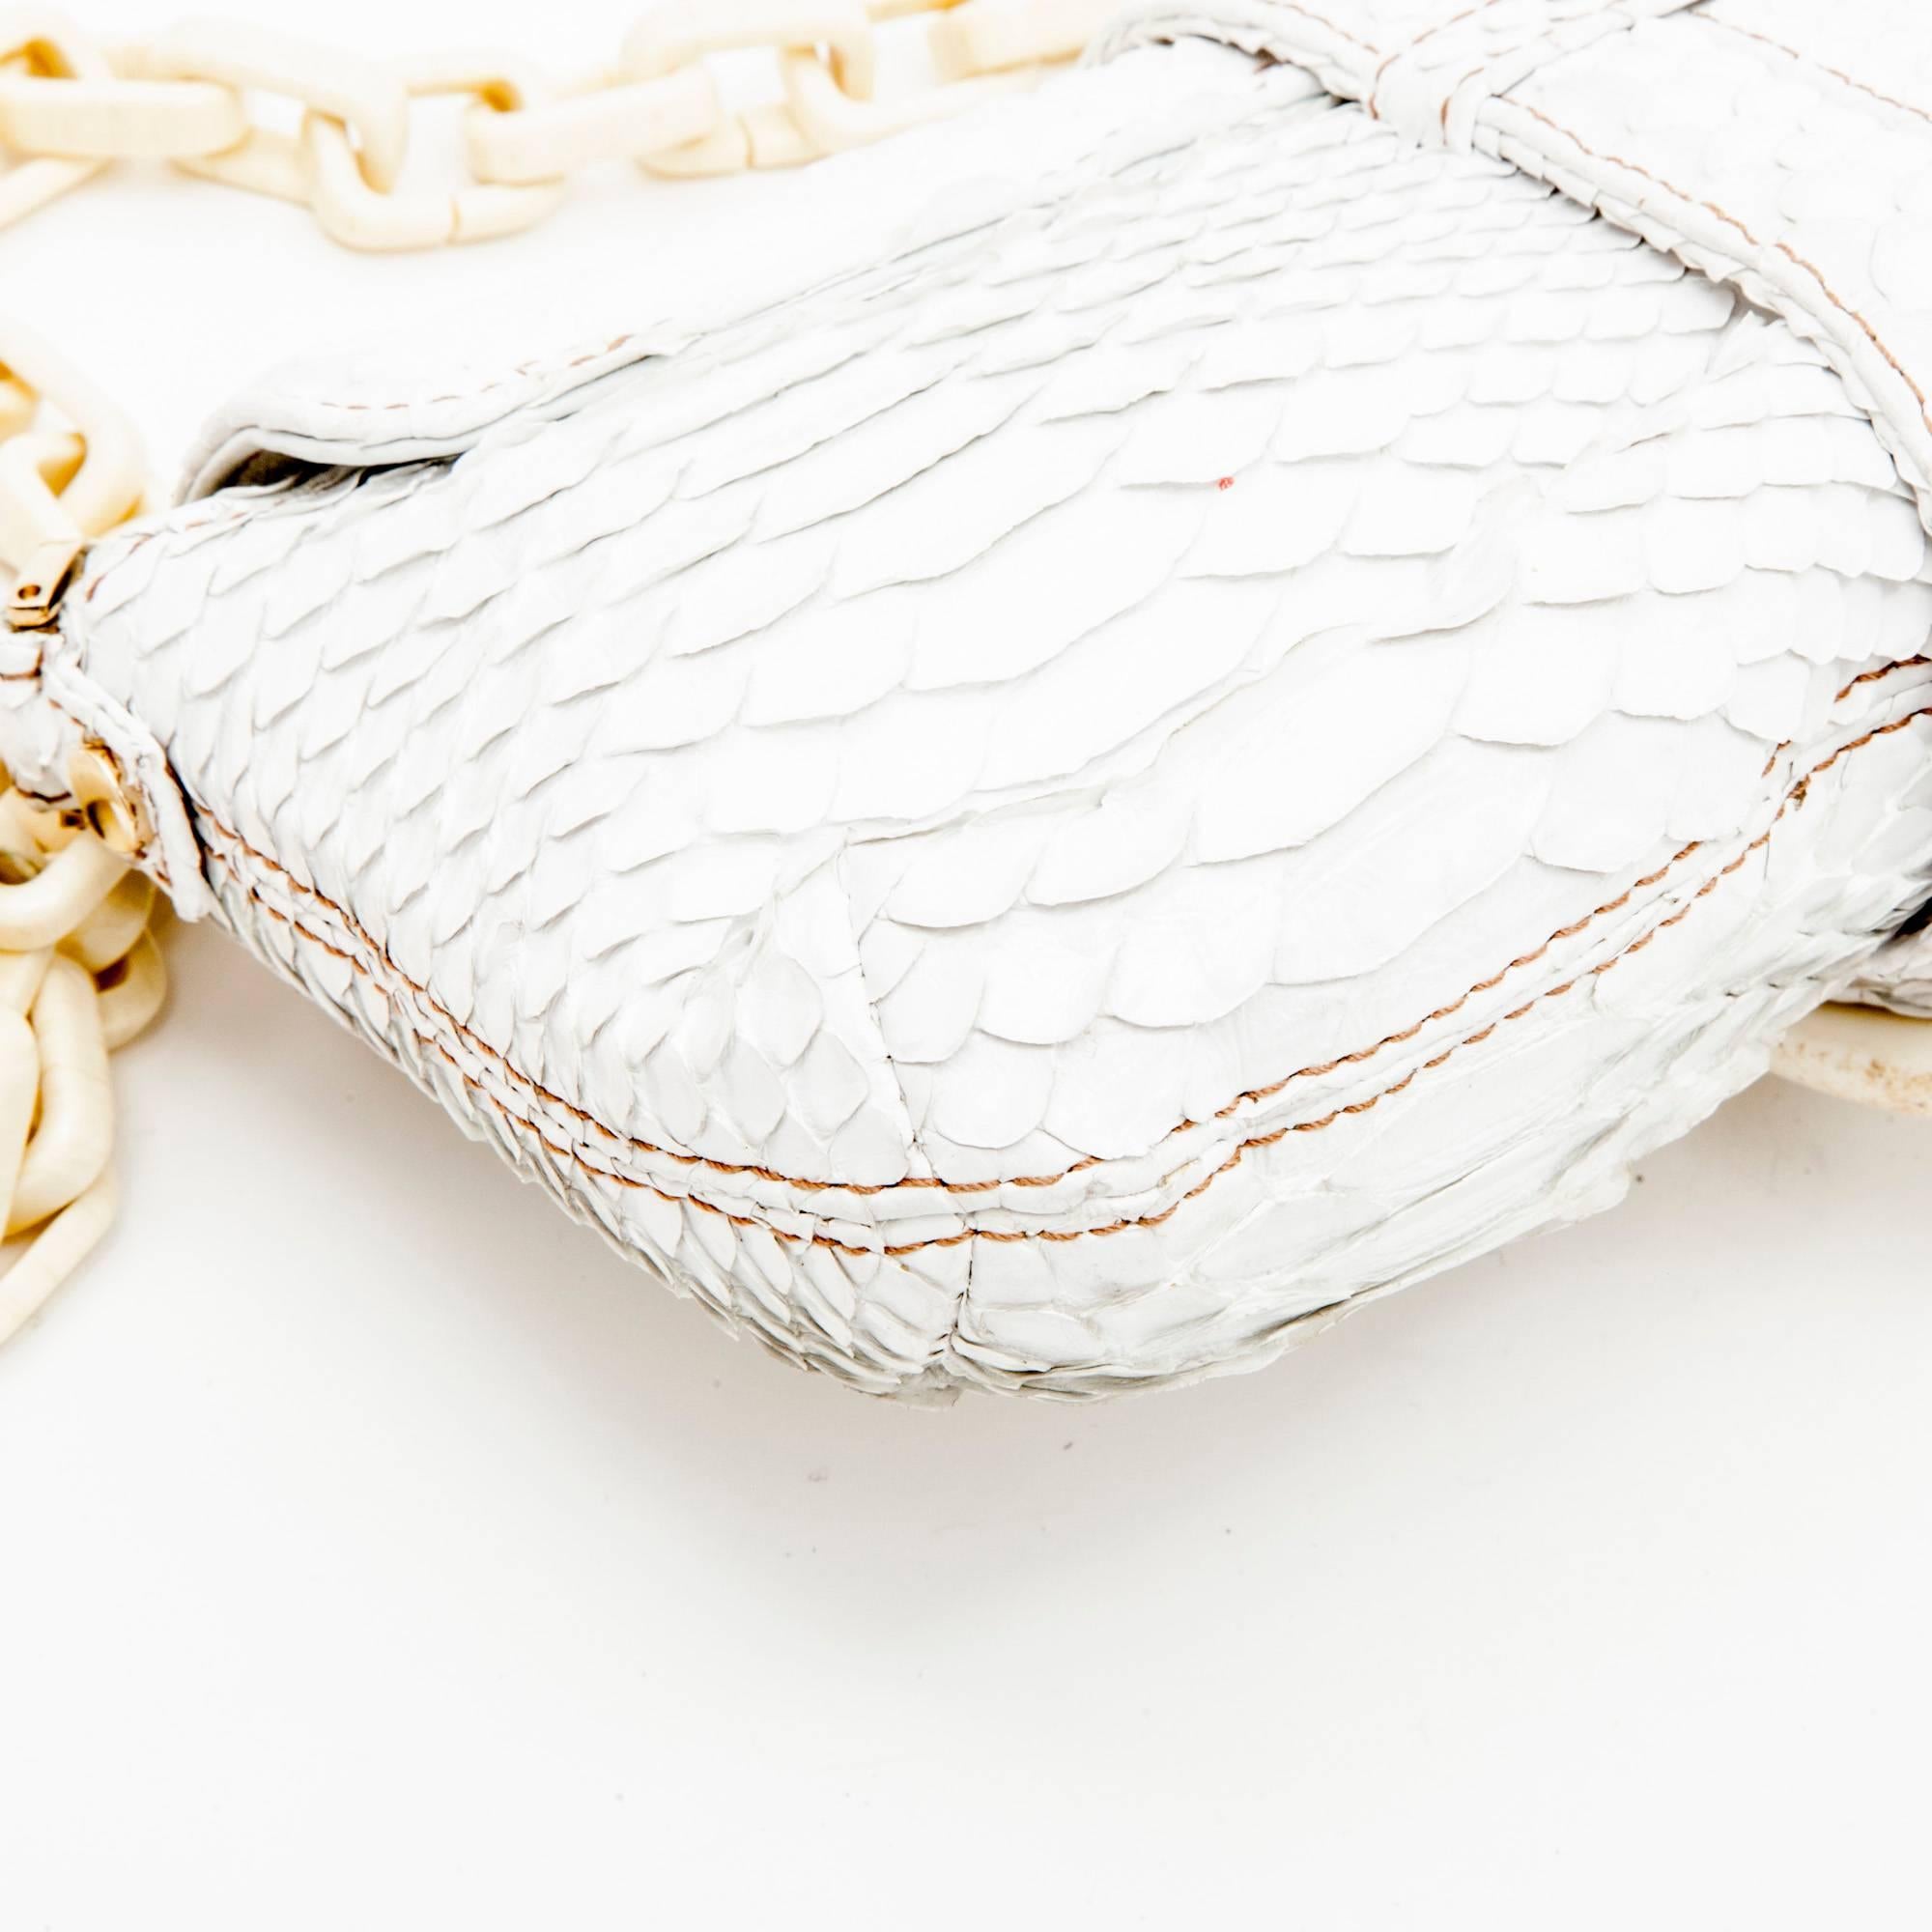 LANVIN Baguette Bag in White Python Leather 3